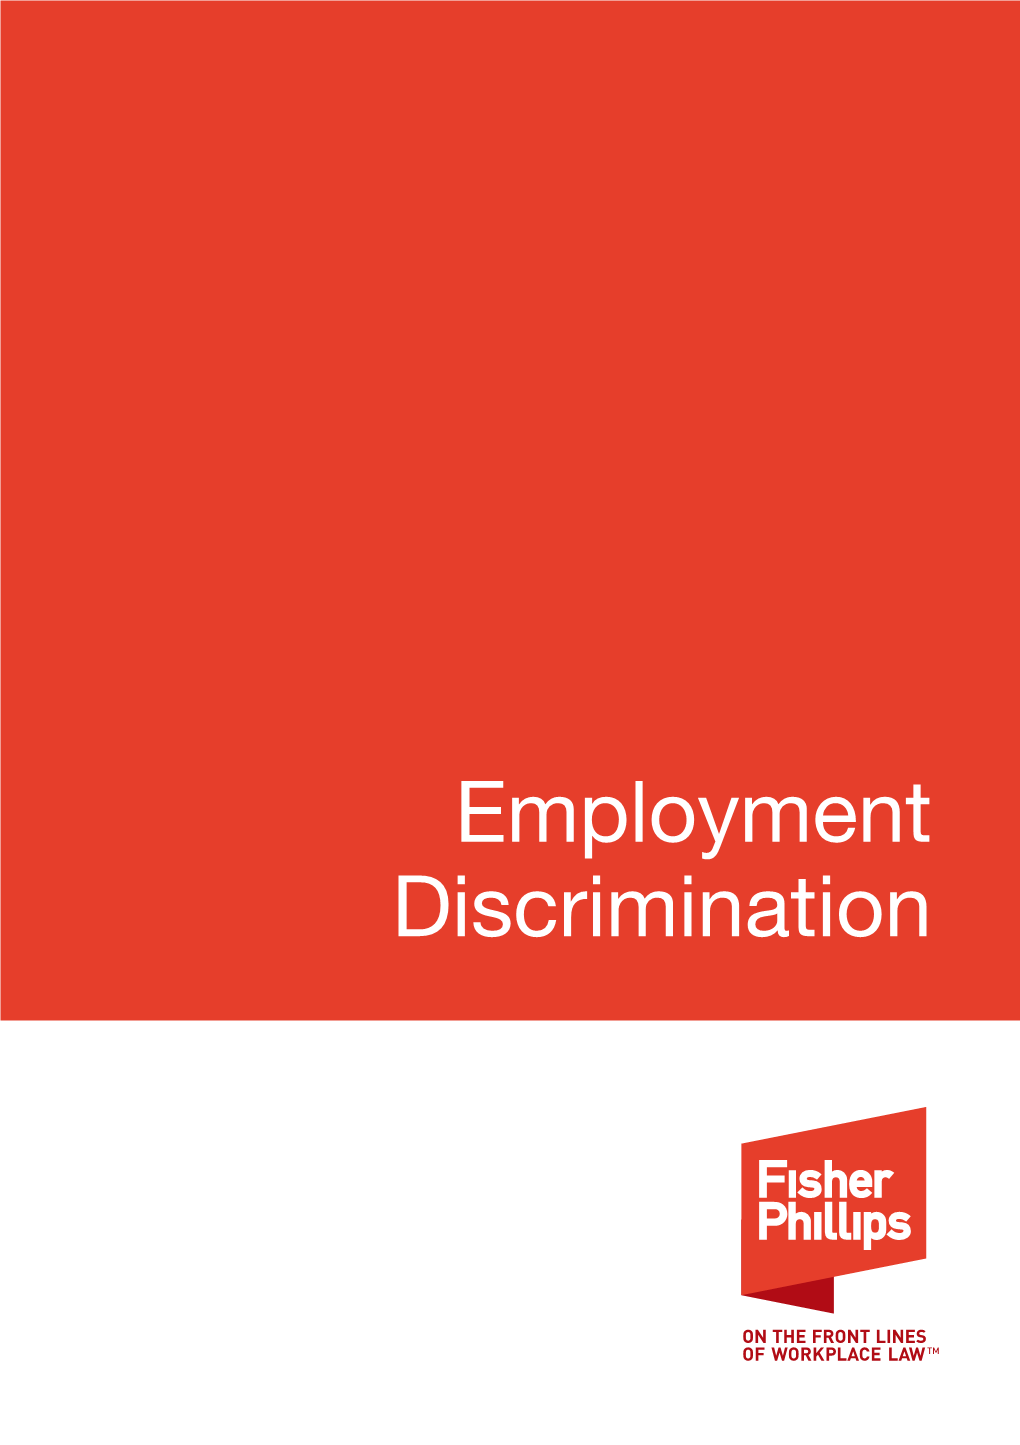 Employment Discrimination EMPLOYMENT DISCRIMINATION